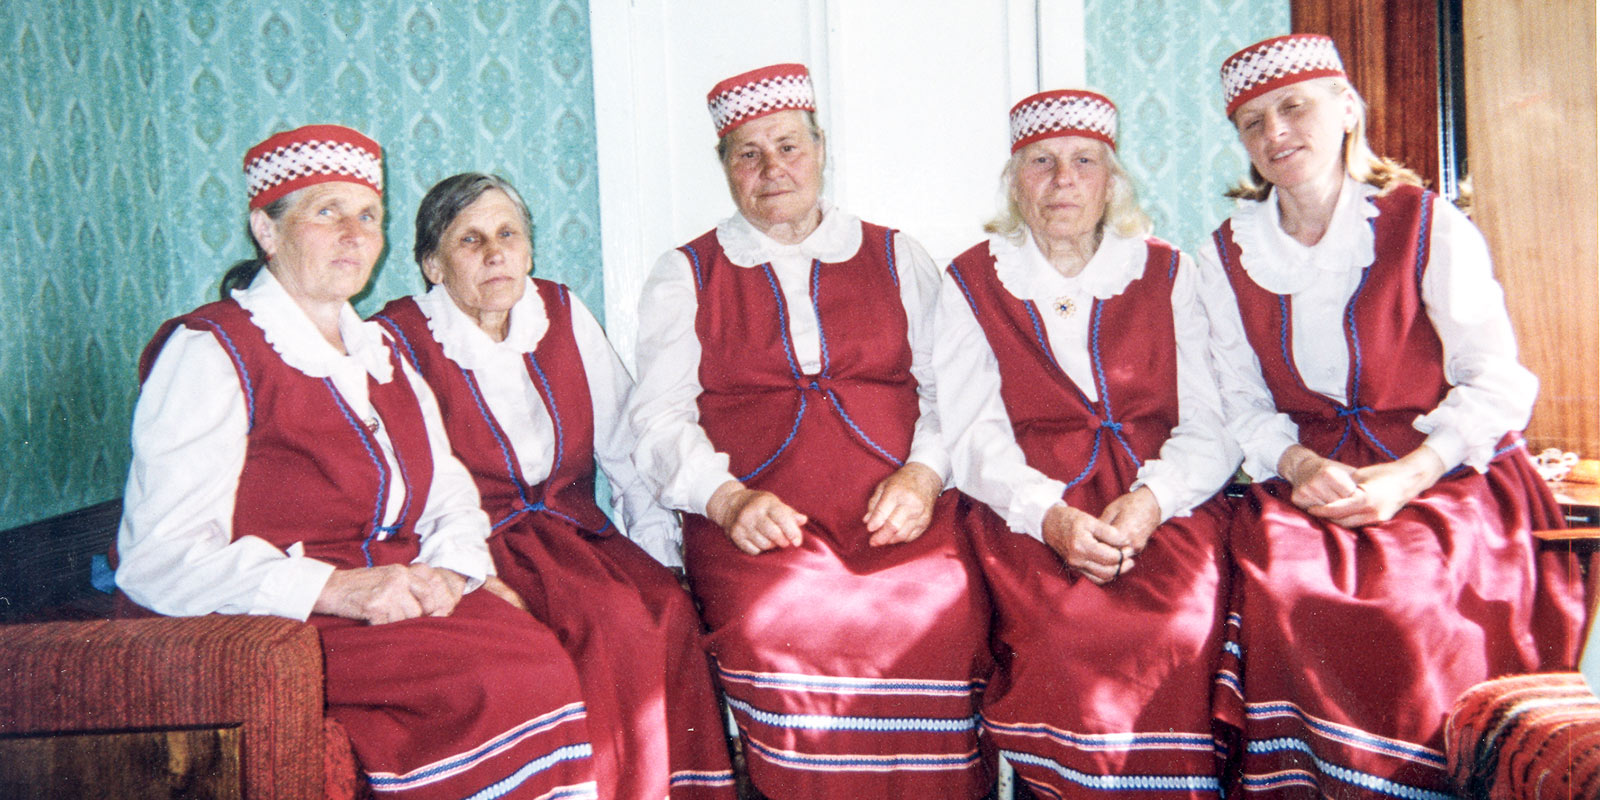 Zolotaja Niva küla folklooriansambli liikmed: Rosalie Taits, Leonora Haller, Lonni Ilves, Emilie Illak ja Valentina Illak. Foto: A. Korb 1995. ERA, VF 123.